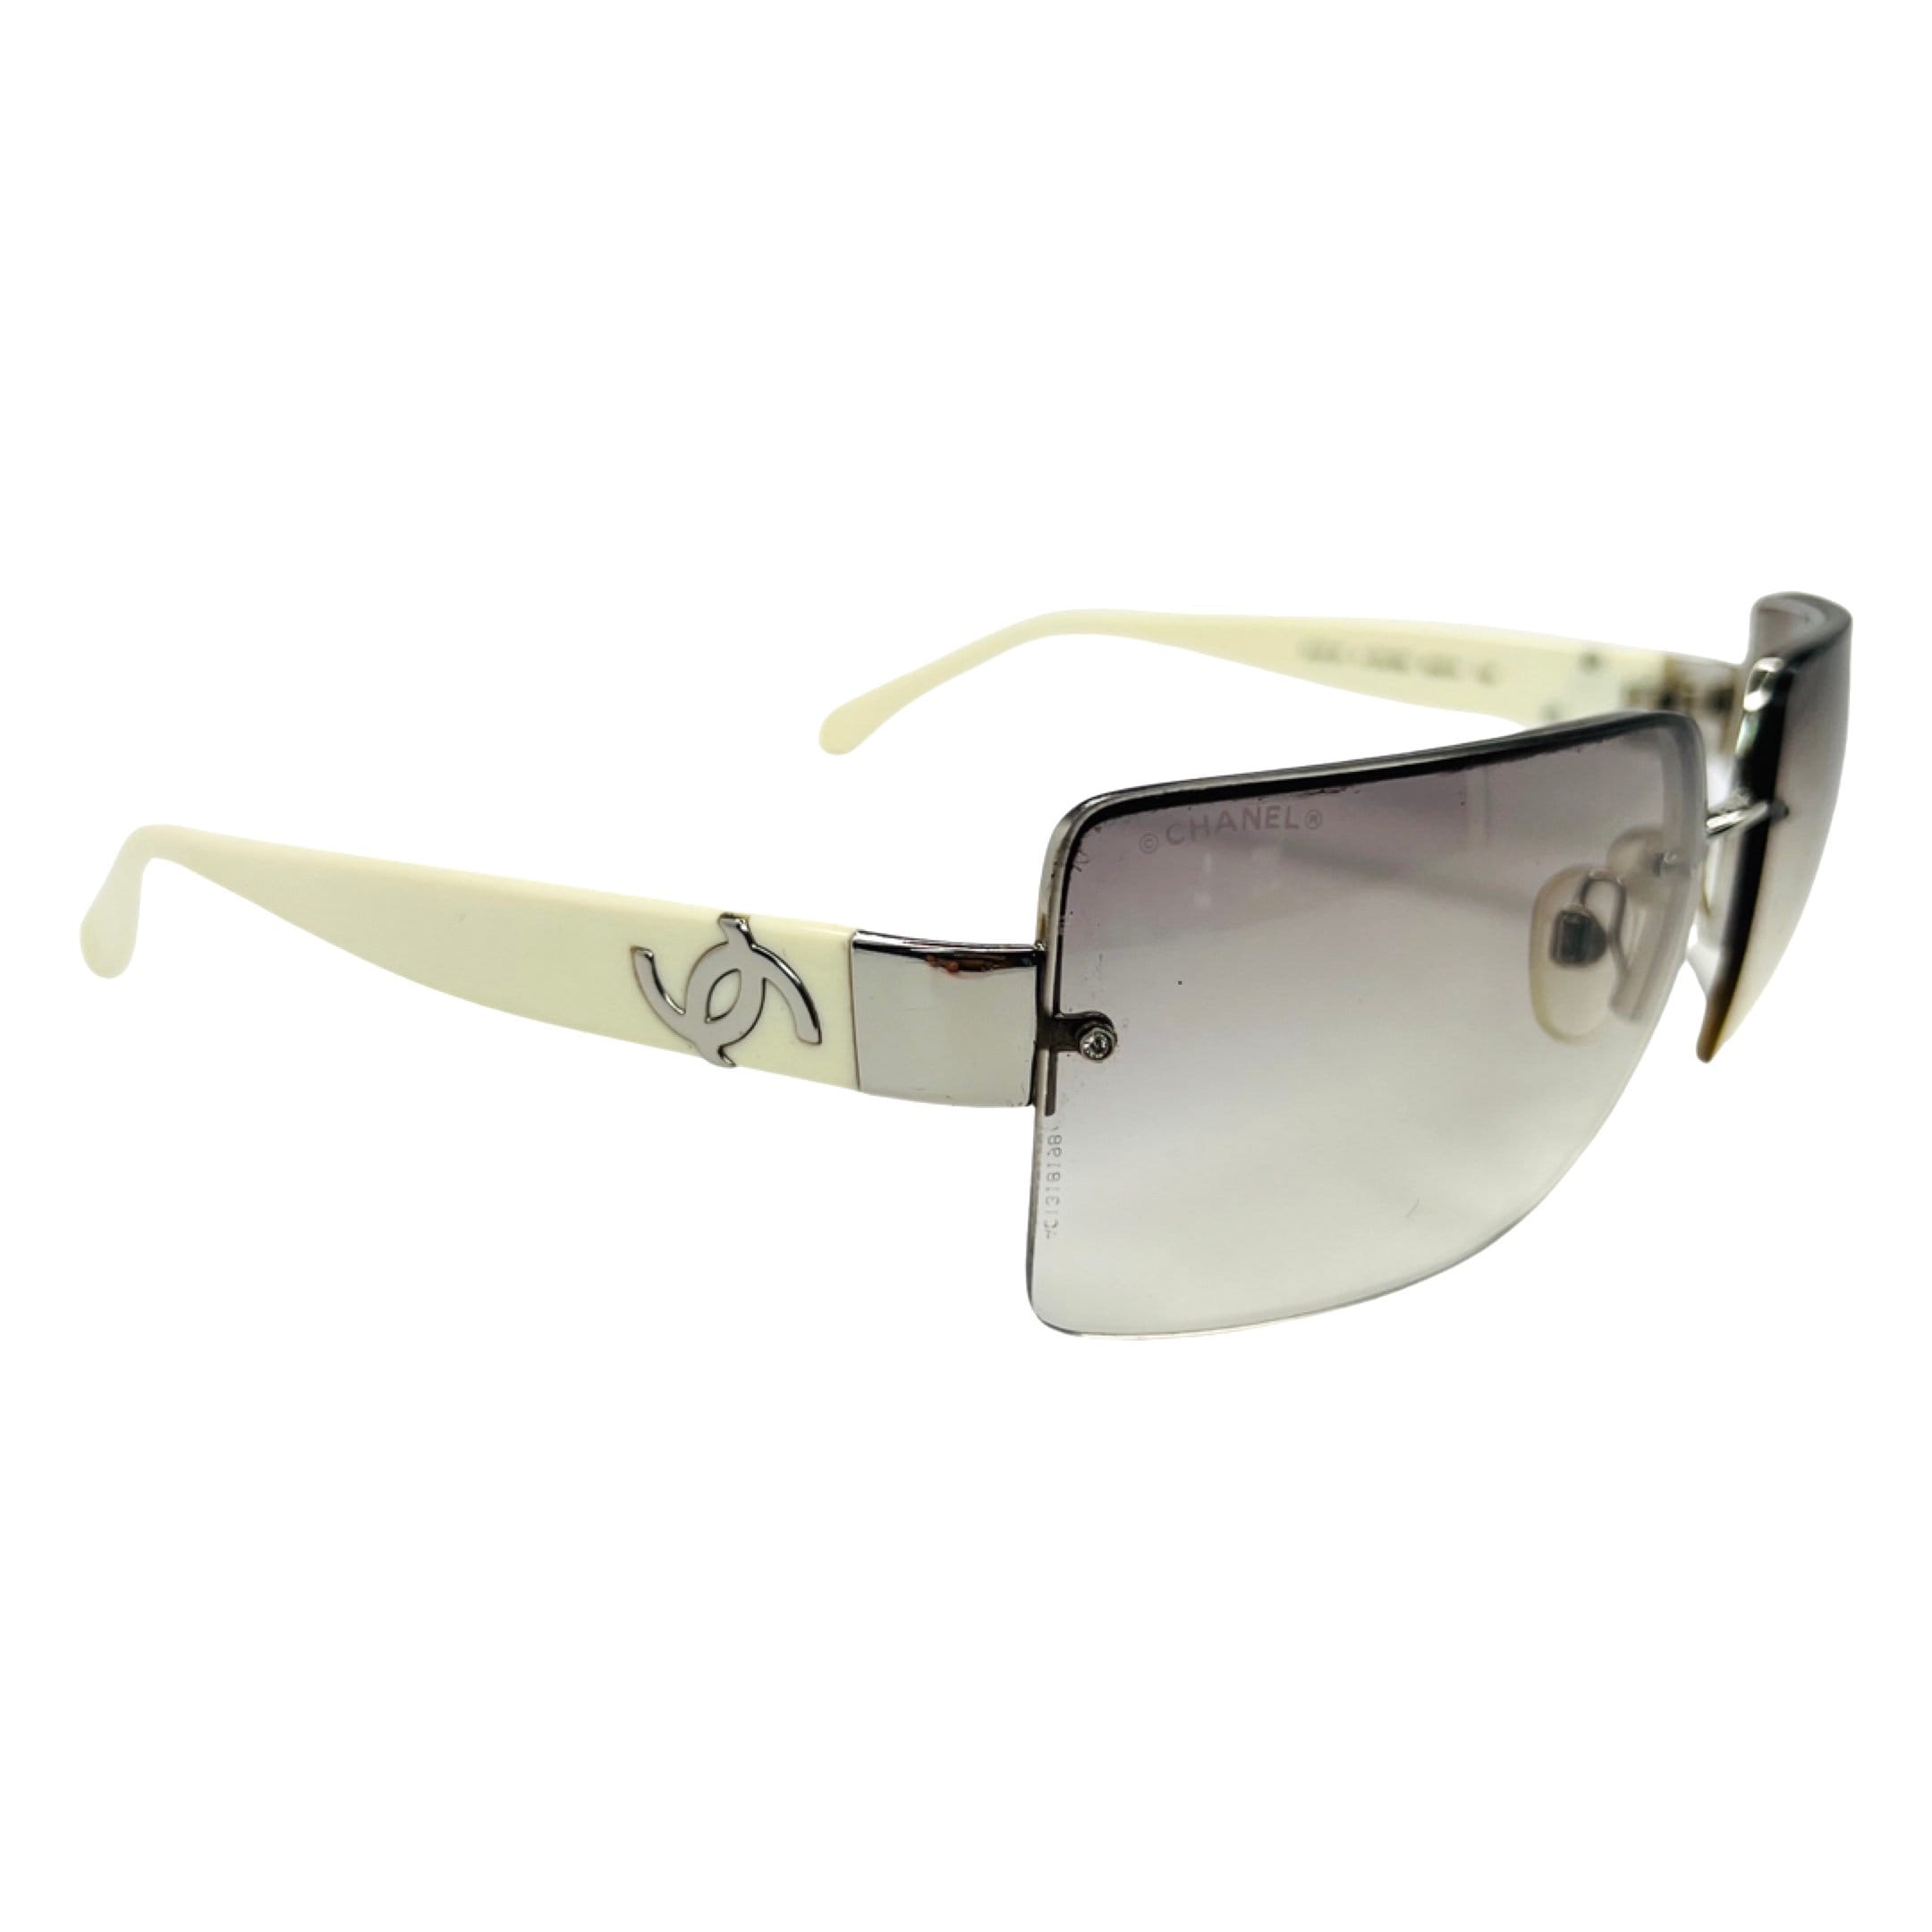 Chanel sunglasses model 4104 lunette brille y2k shades rimless